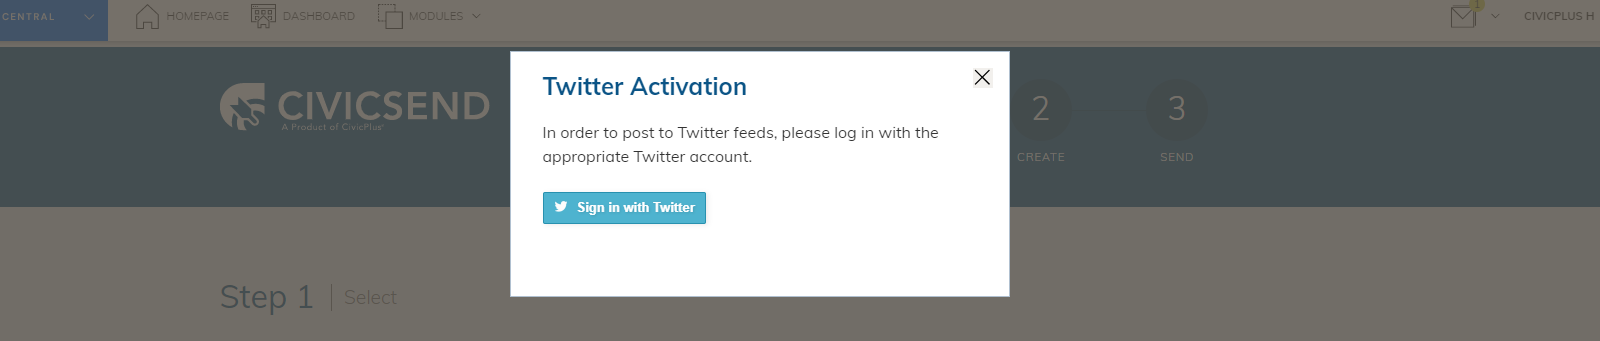 Twitter Activation